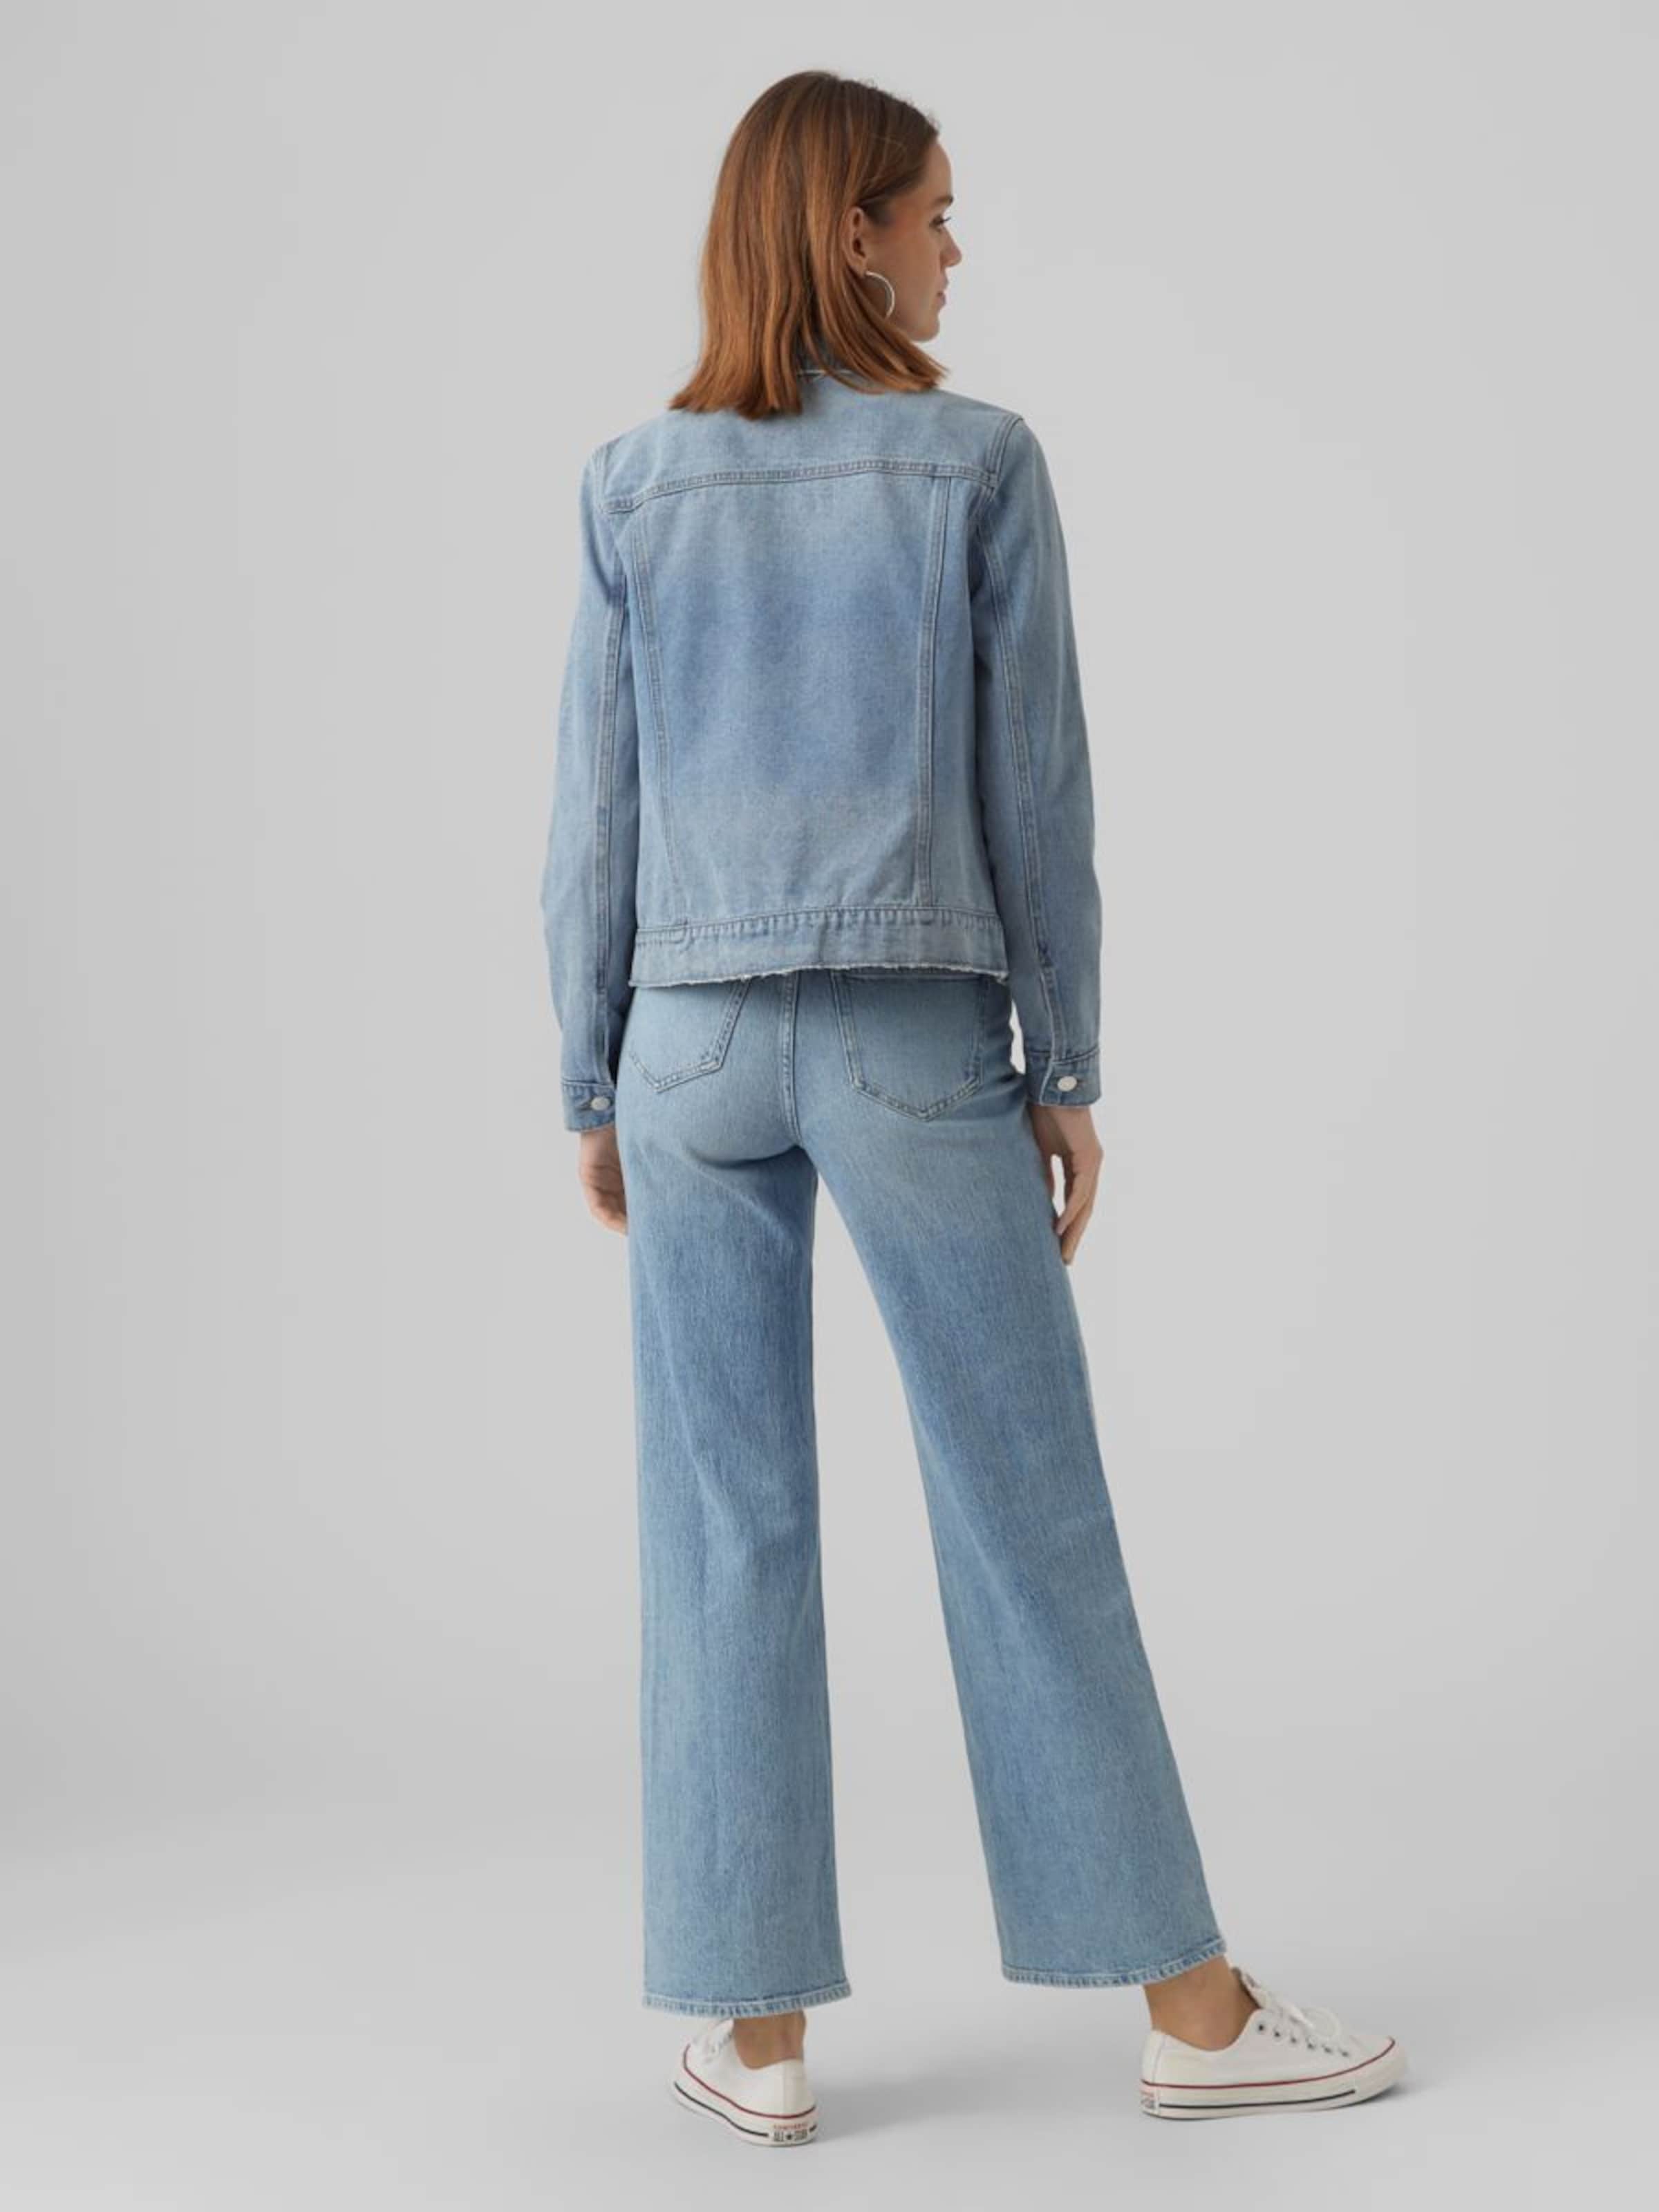 Vero Moda Cropped Jean Jacket In Light Blue In Light Blue Denim | ModeSens